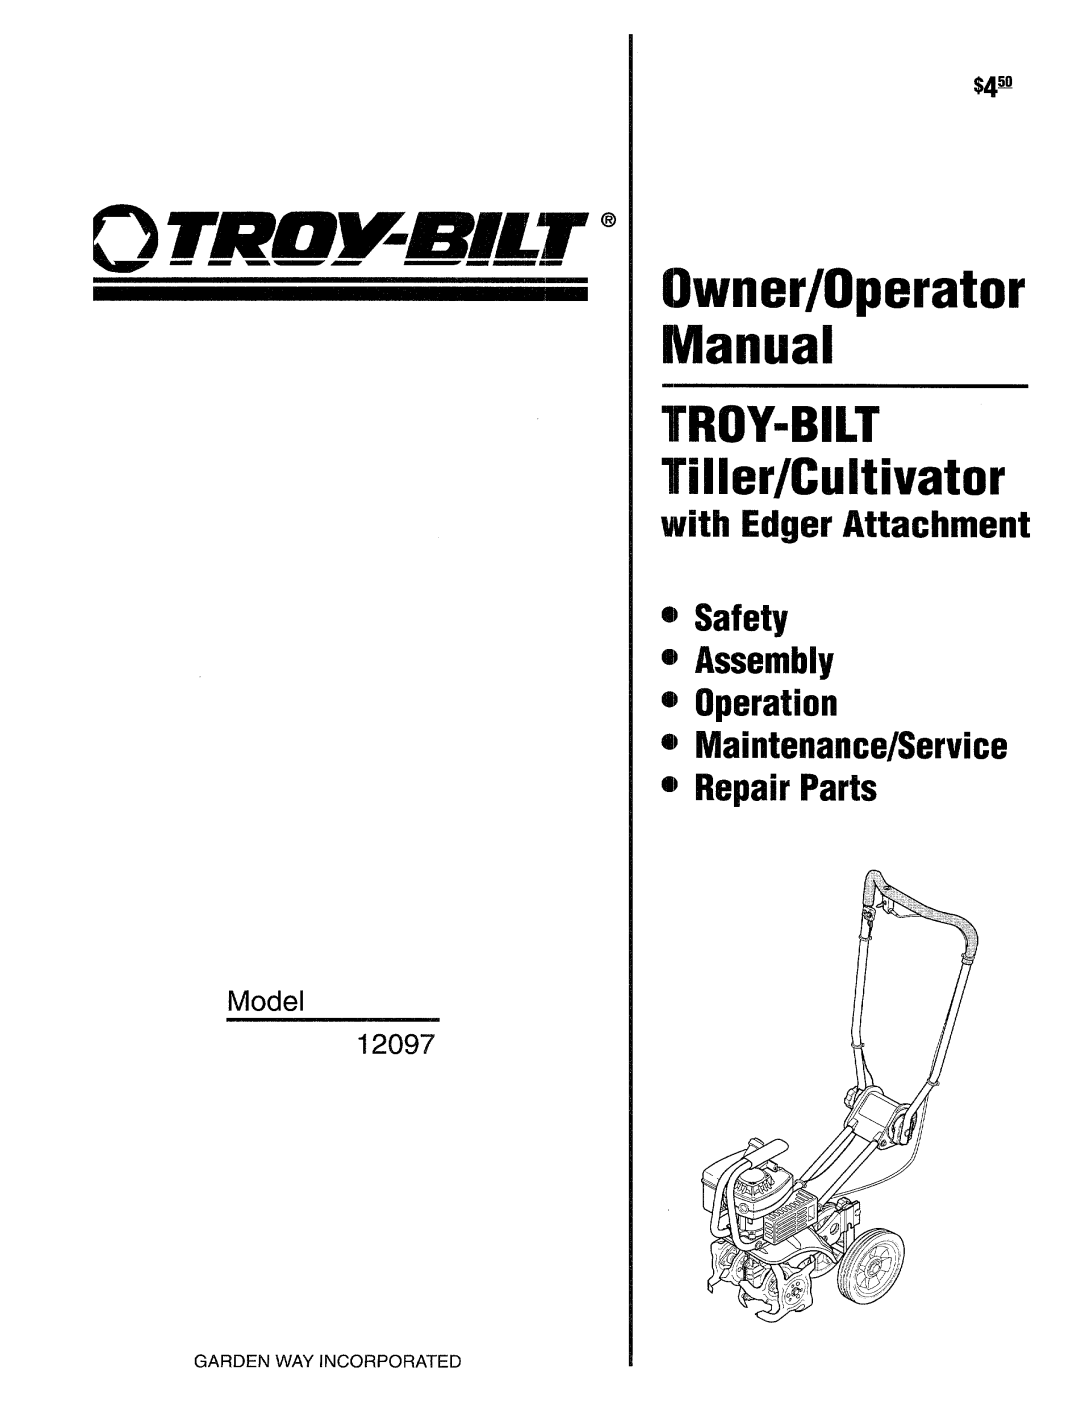 Troy-Bilt 12097 manual 